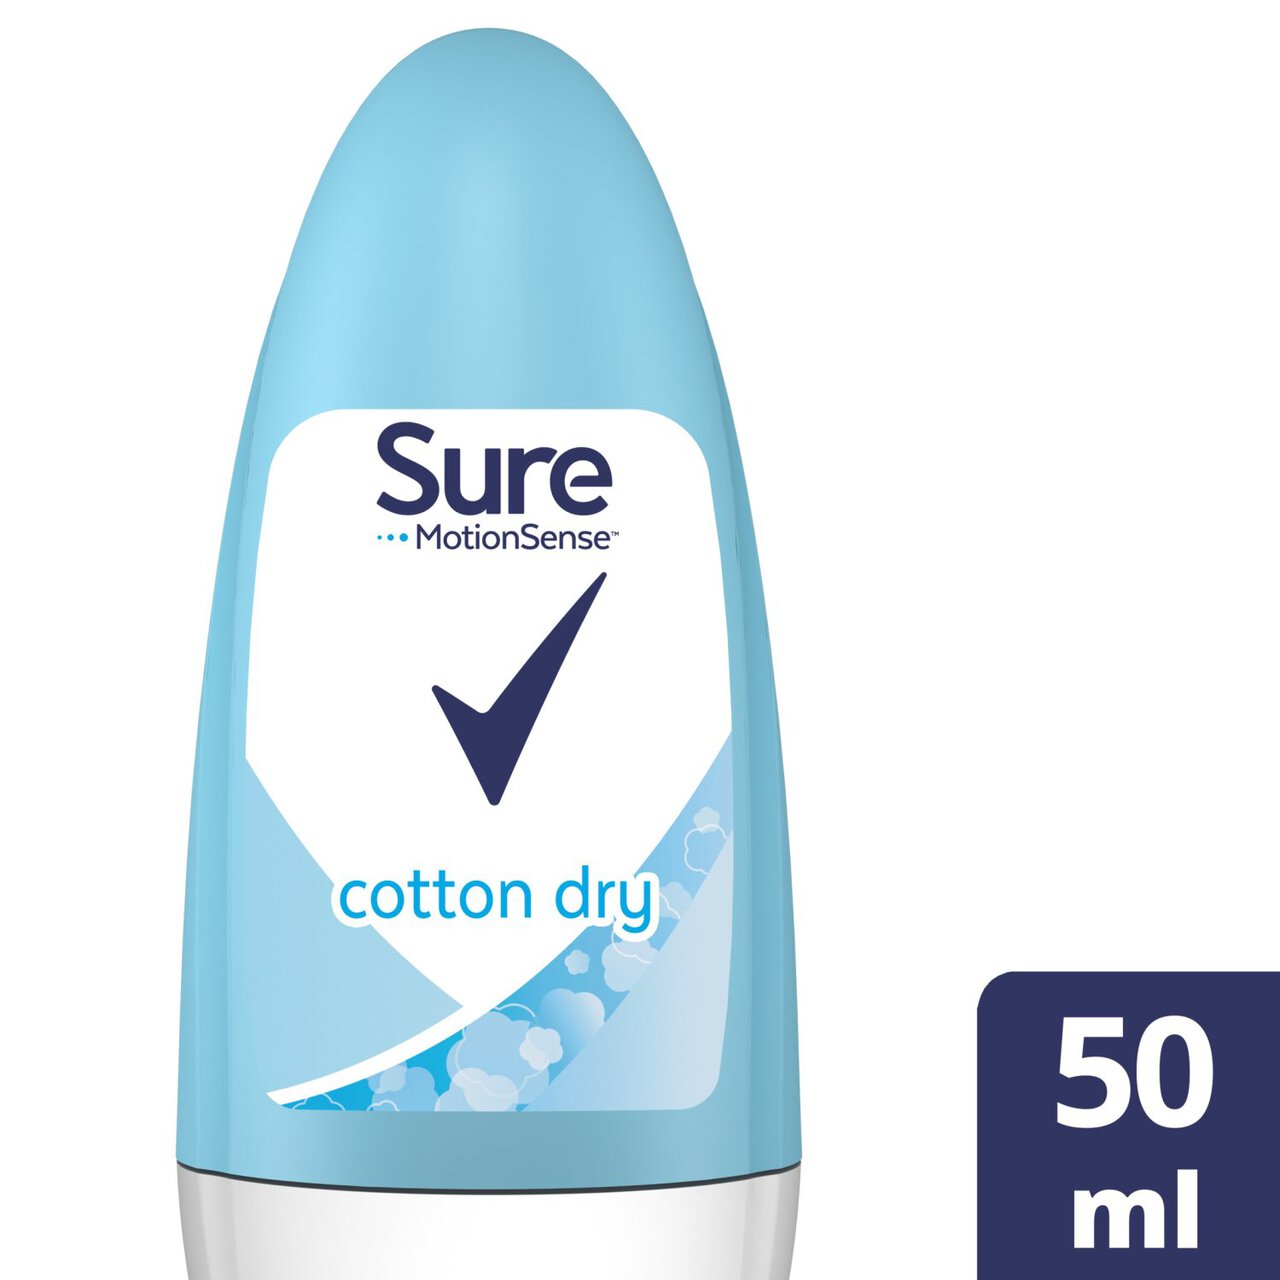 Sure Women Cotton Roll-On Anti-Perspirant Deodorant 50ml